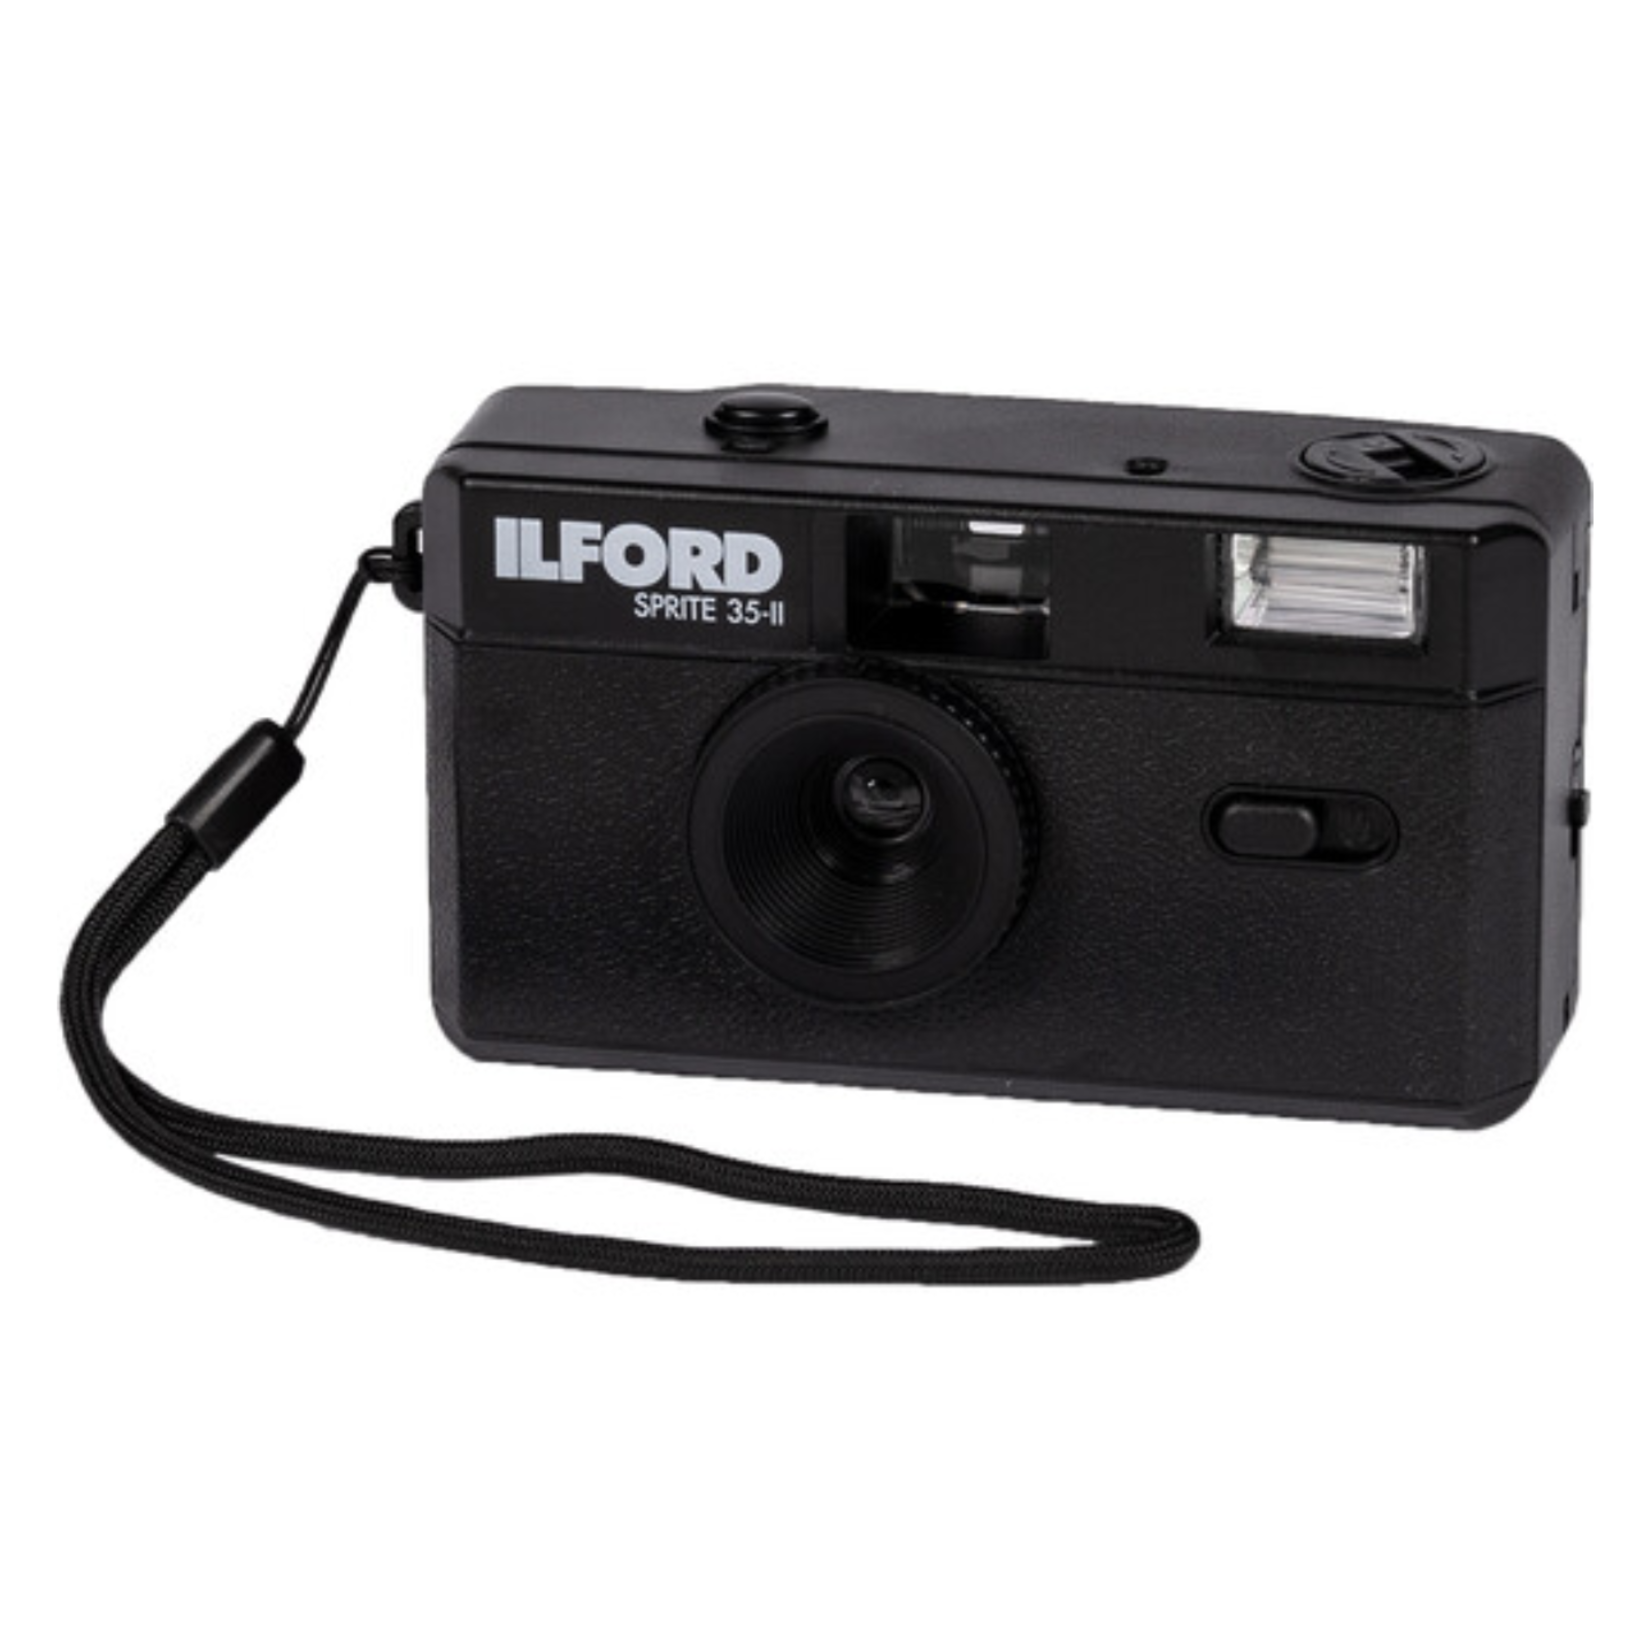 Ilford Ilford Sprite 35-II Film Cameras (Choose Color)